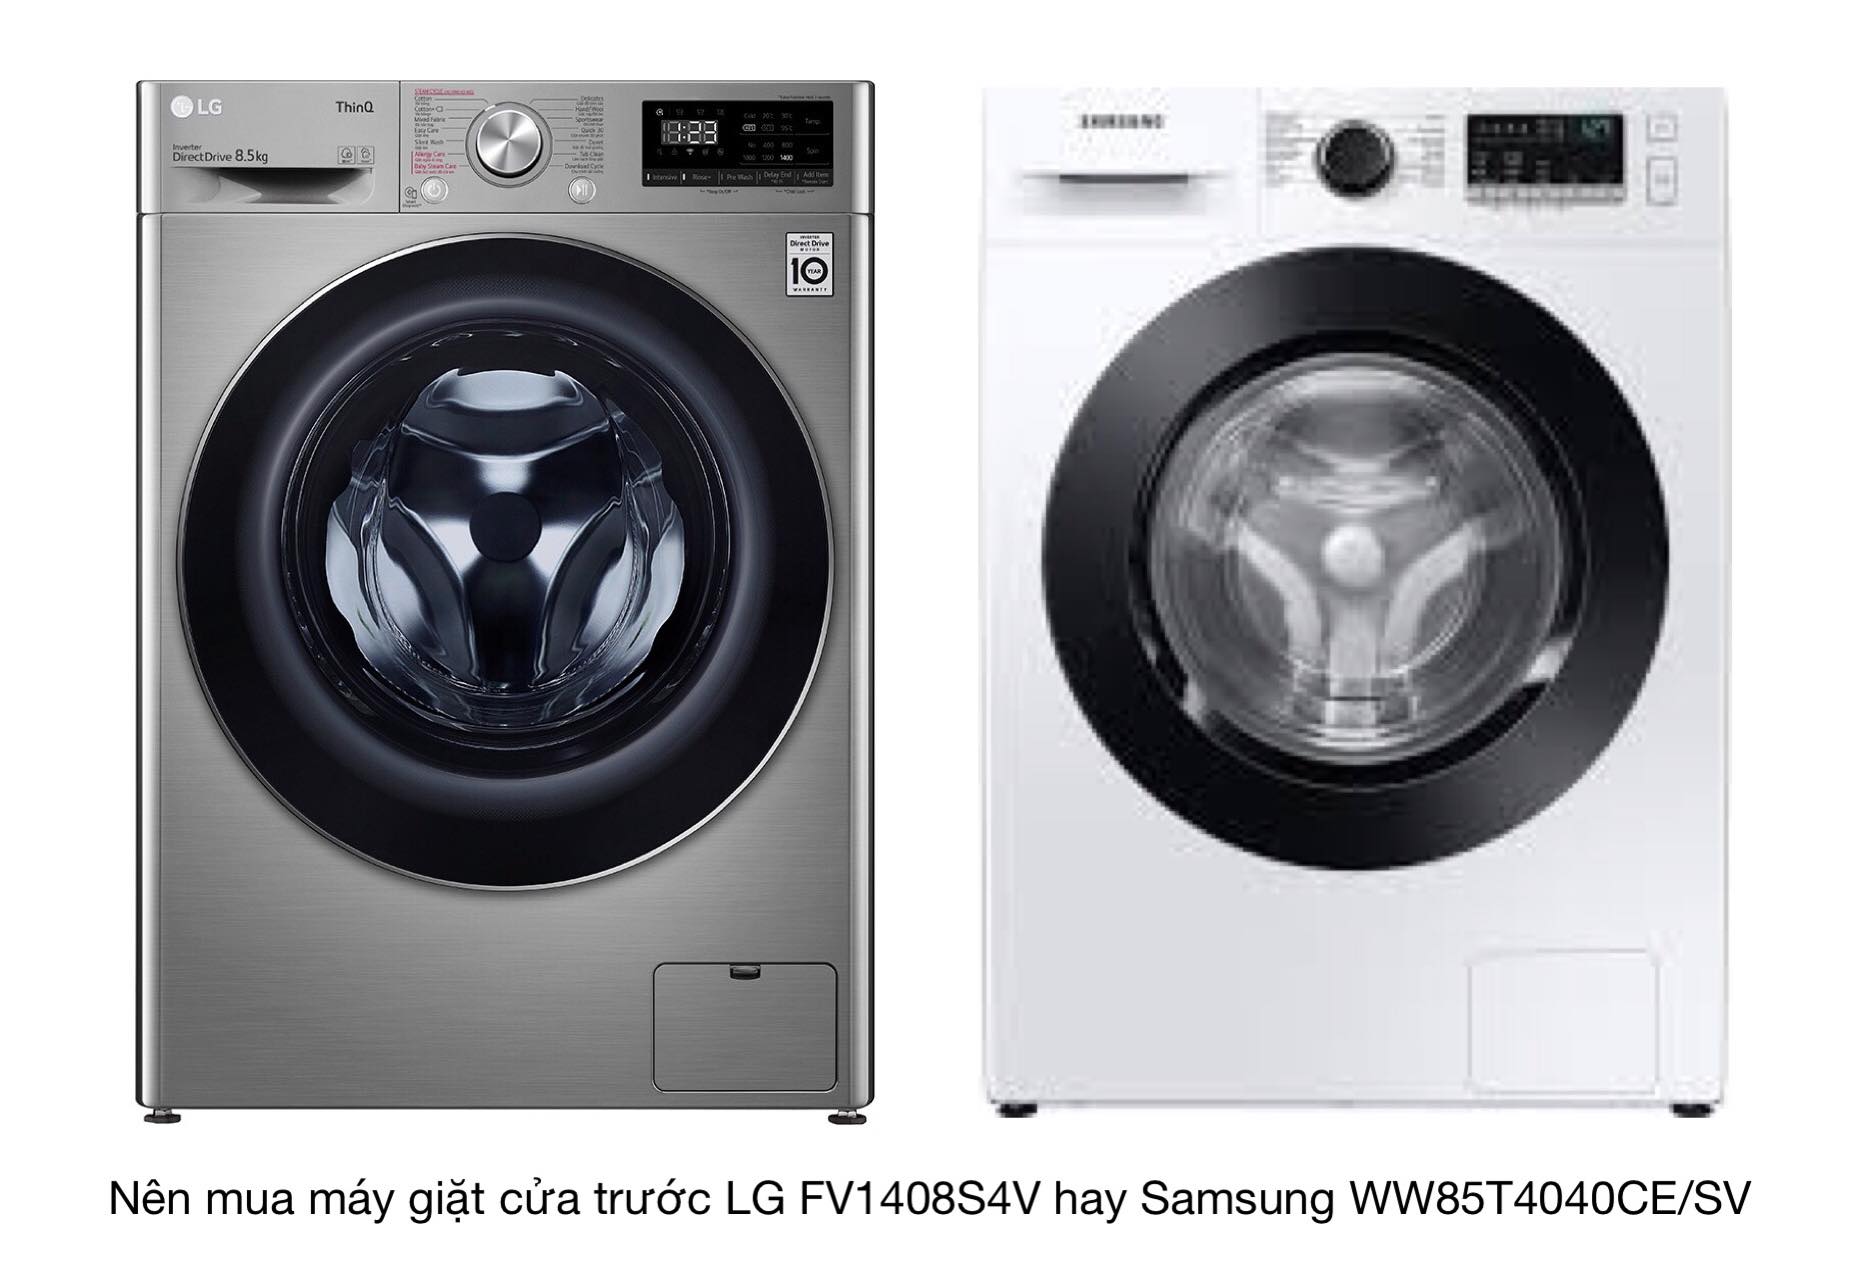 Nên mua máy giặt cửa trước LG FV1408S4V hay Samsung WW85T4040CE/SV